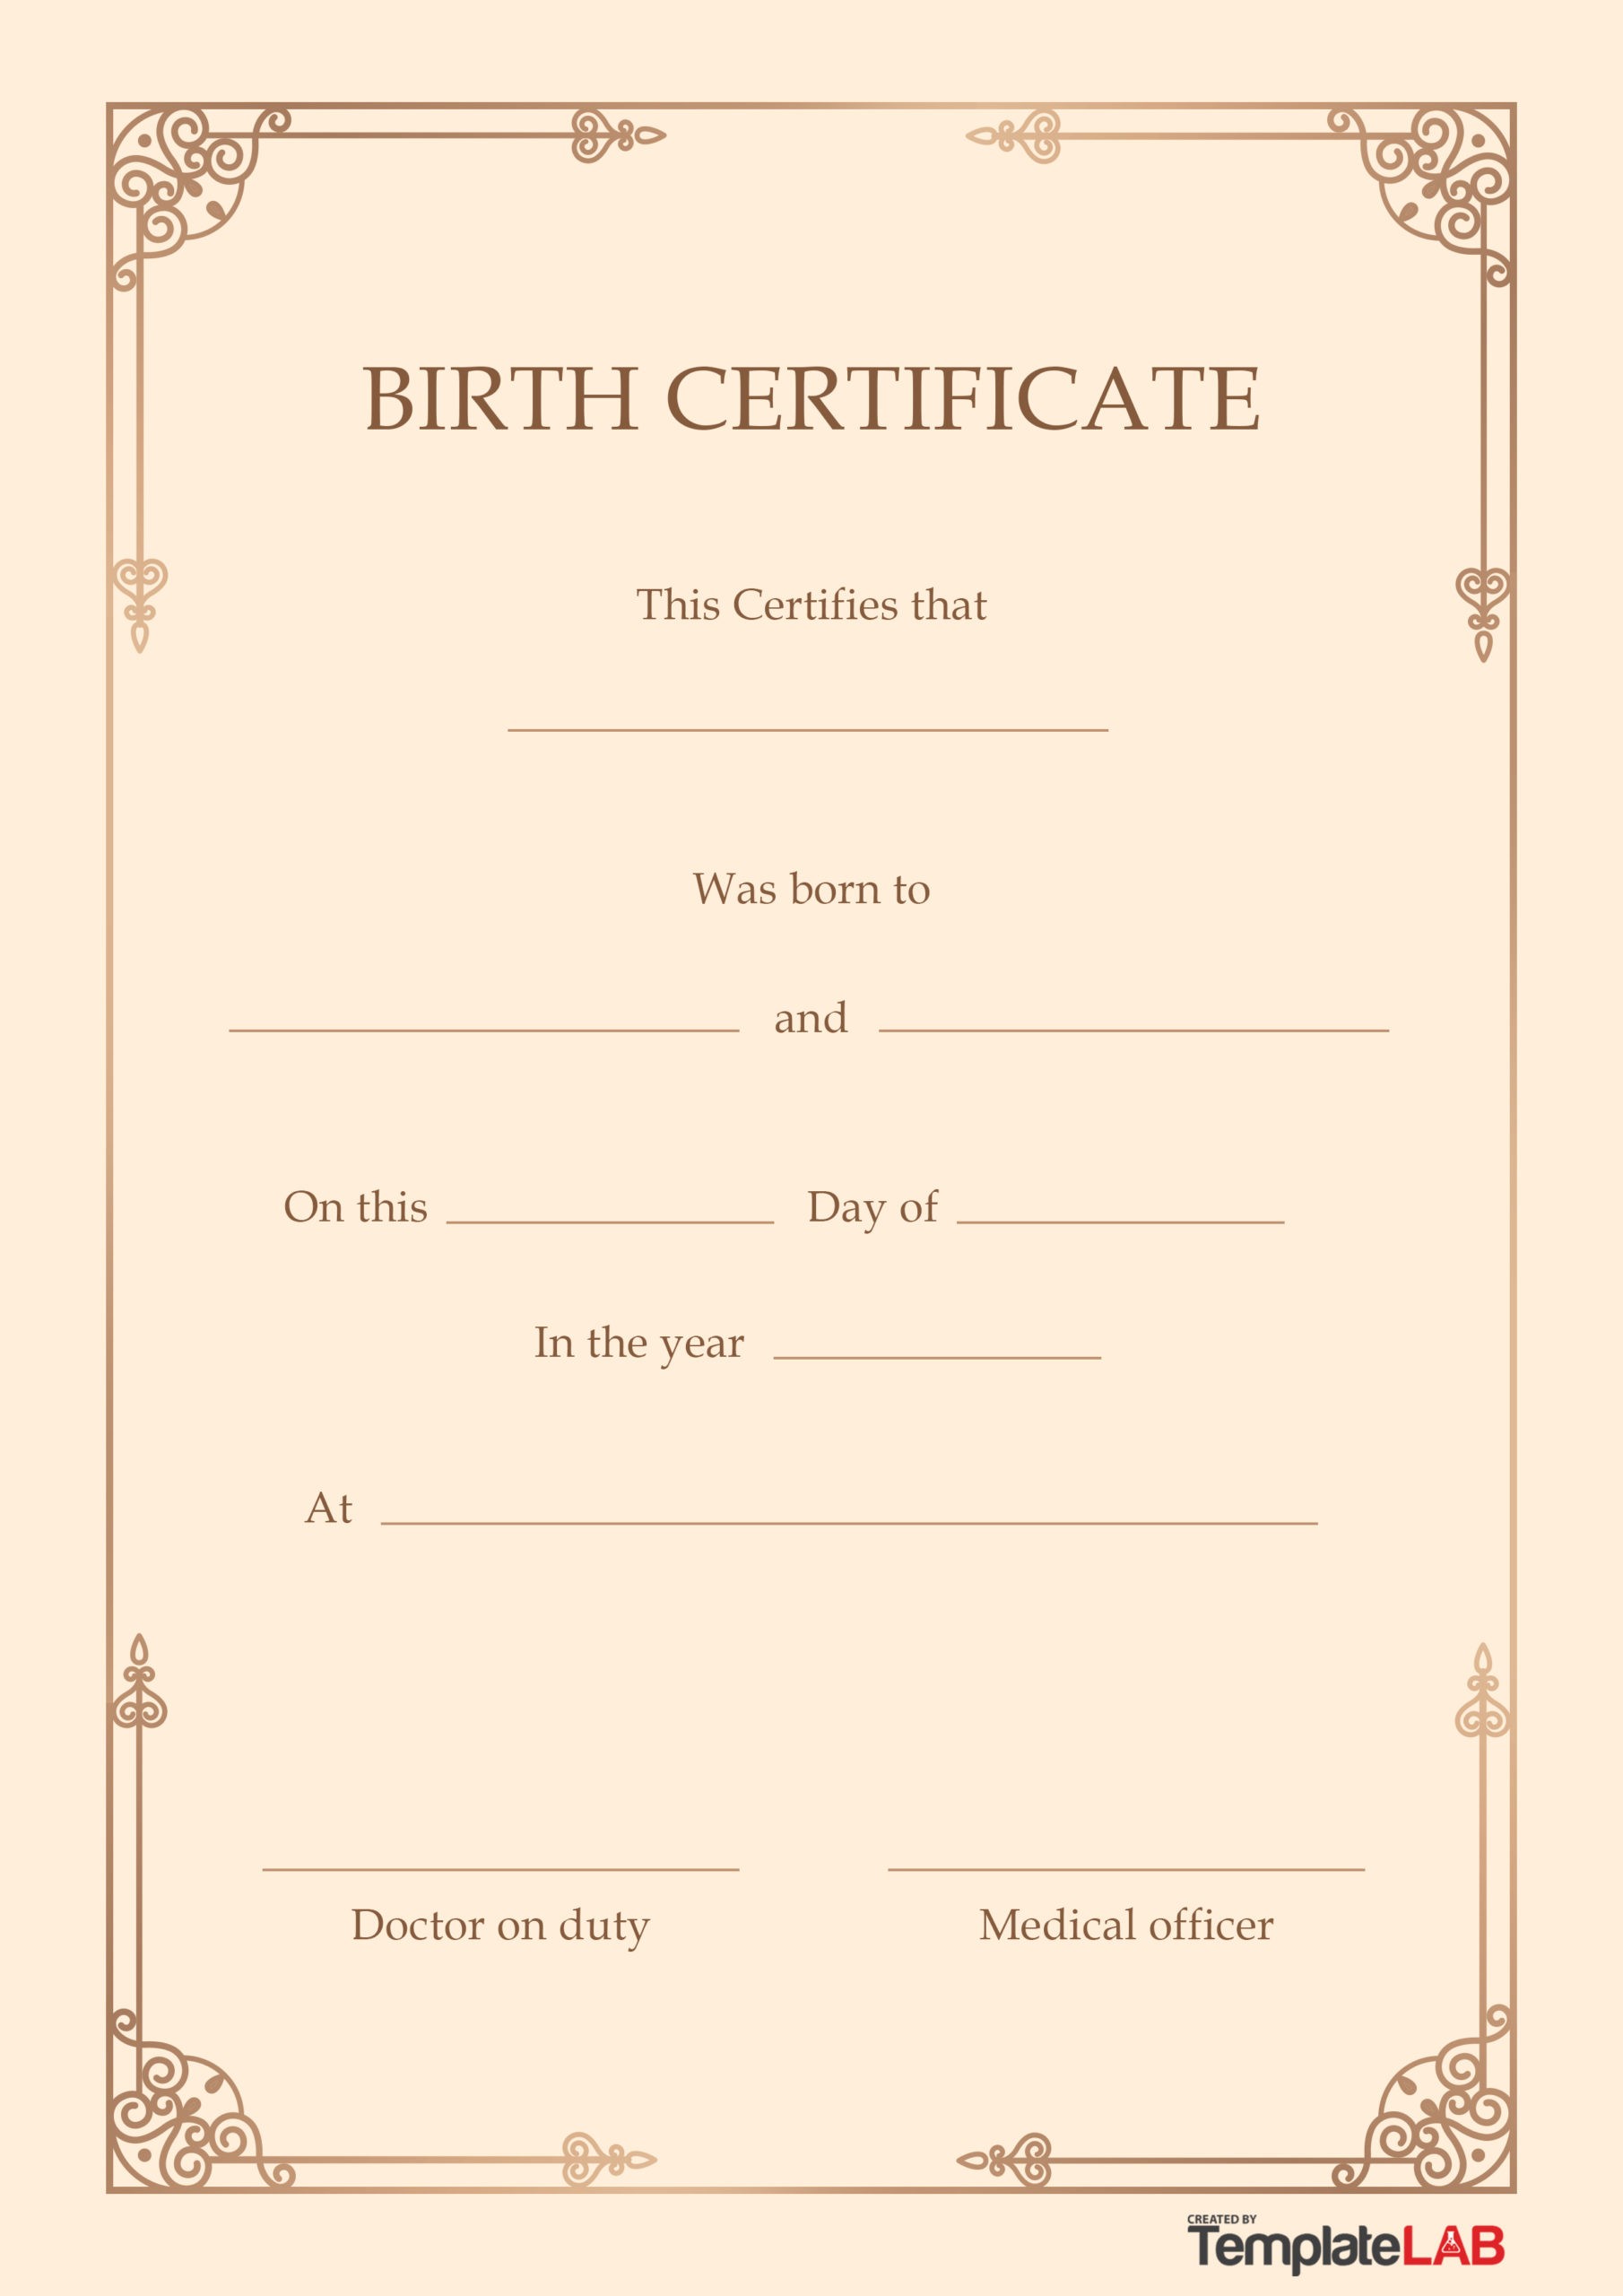 15 Birth Certificate Templates (Word & PDF) ᐅ TemplateLab